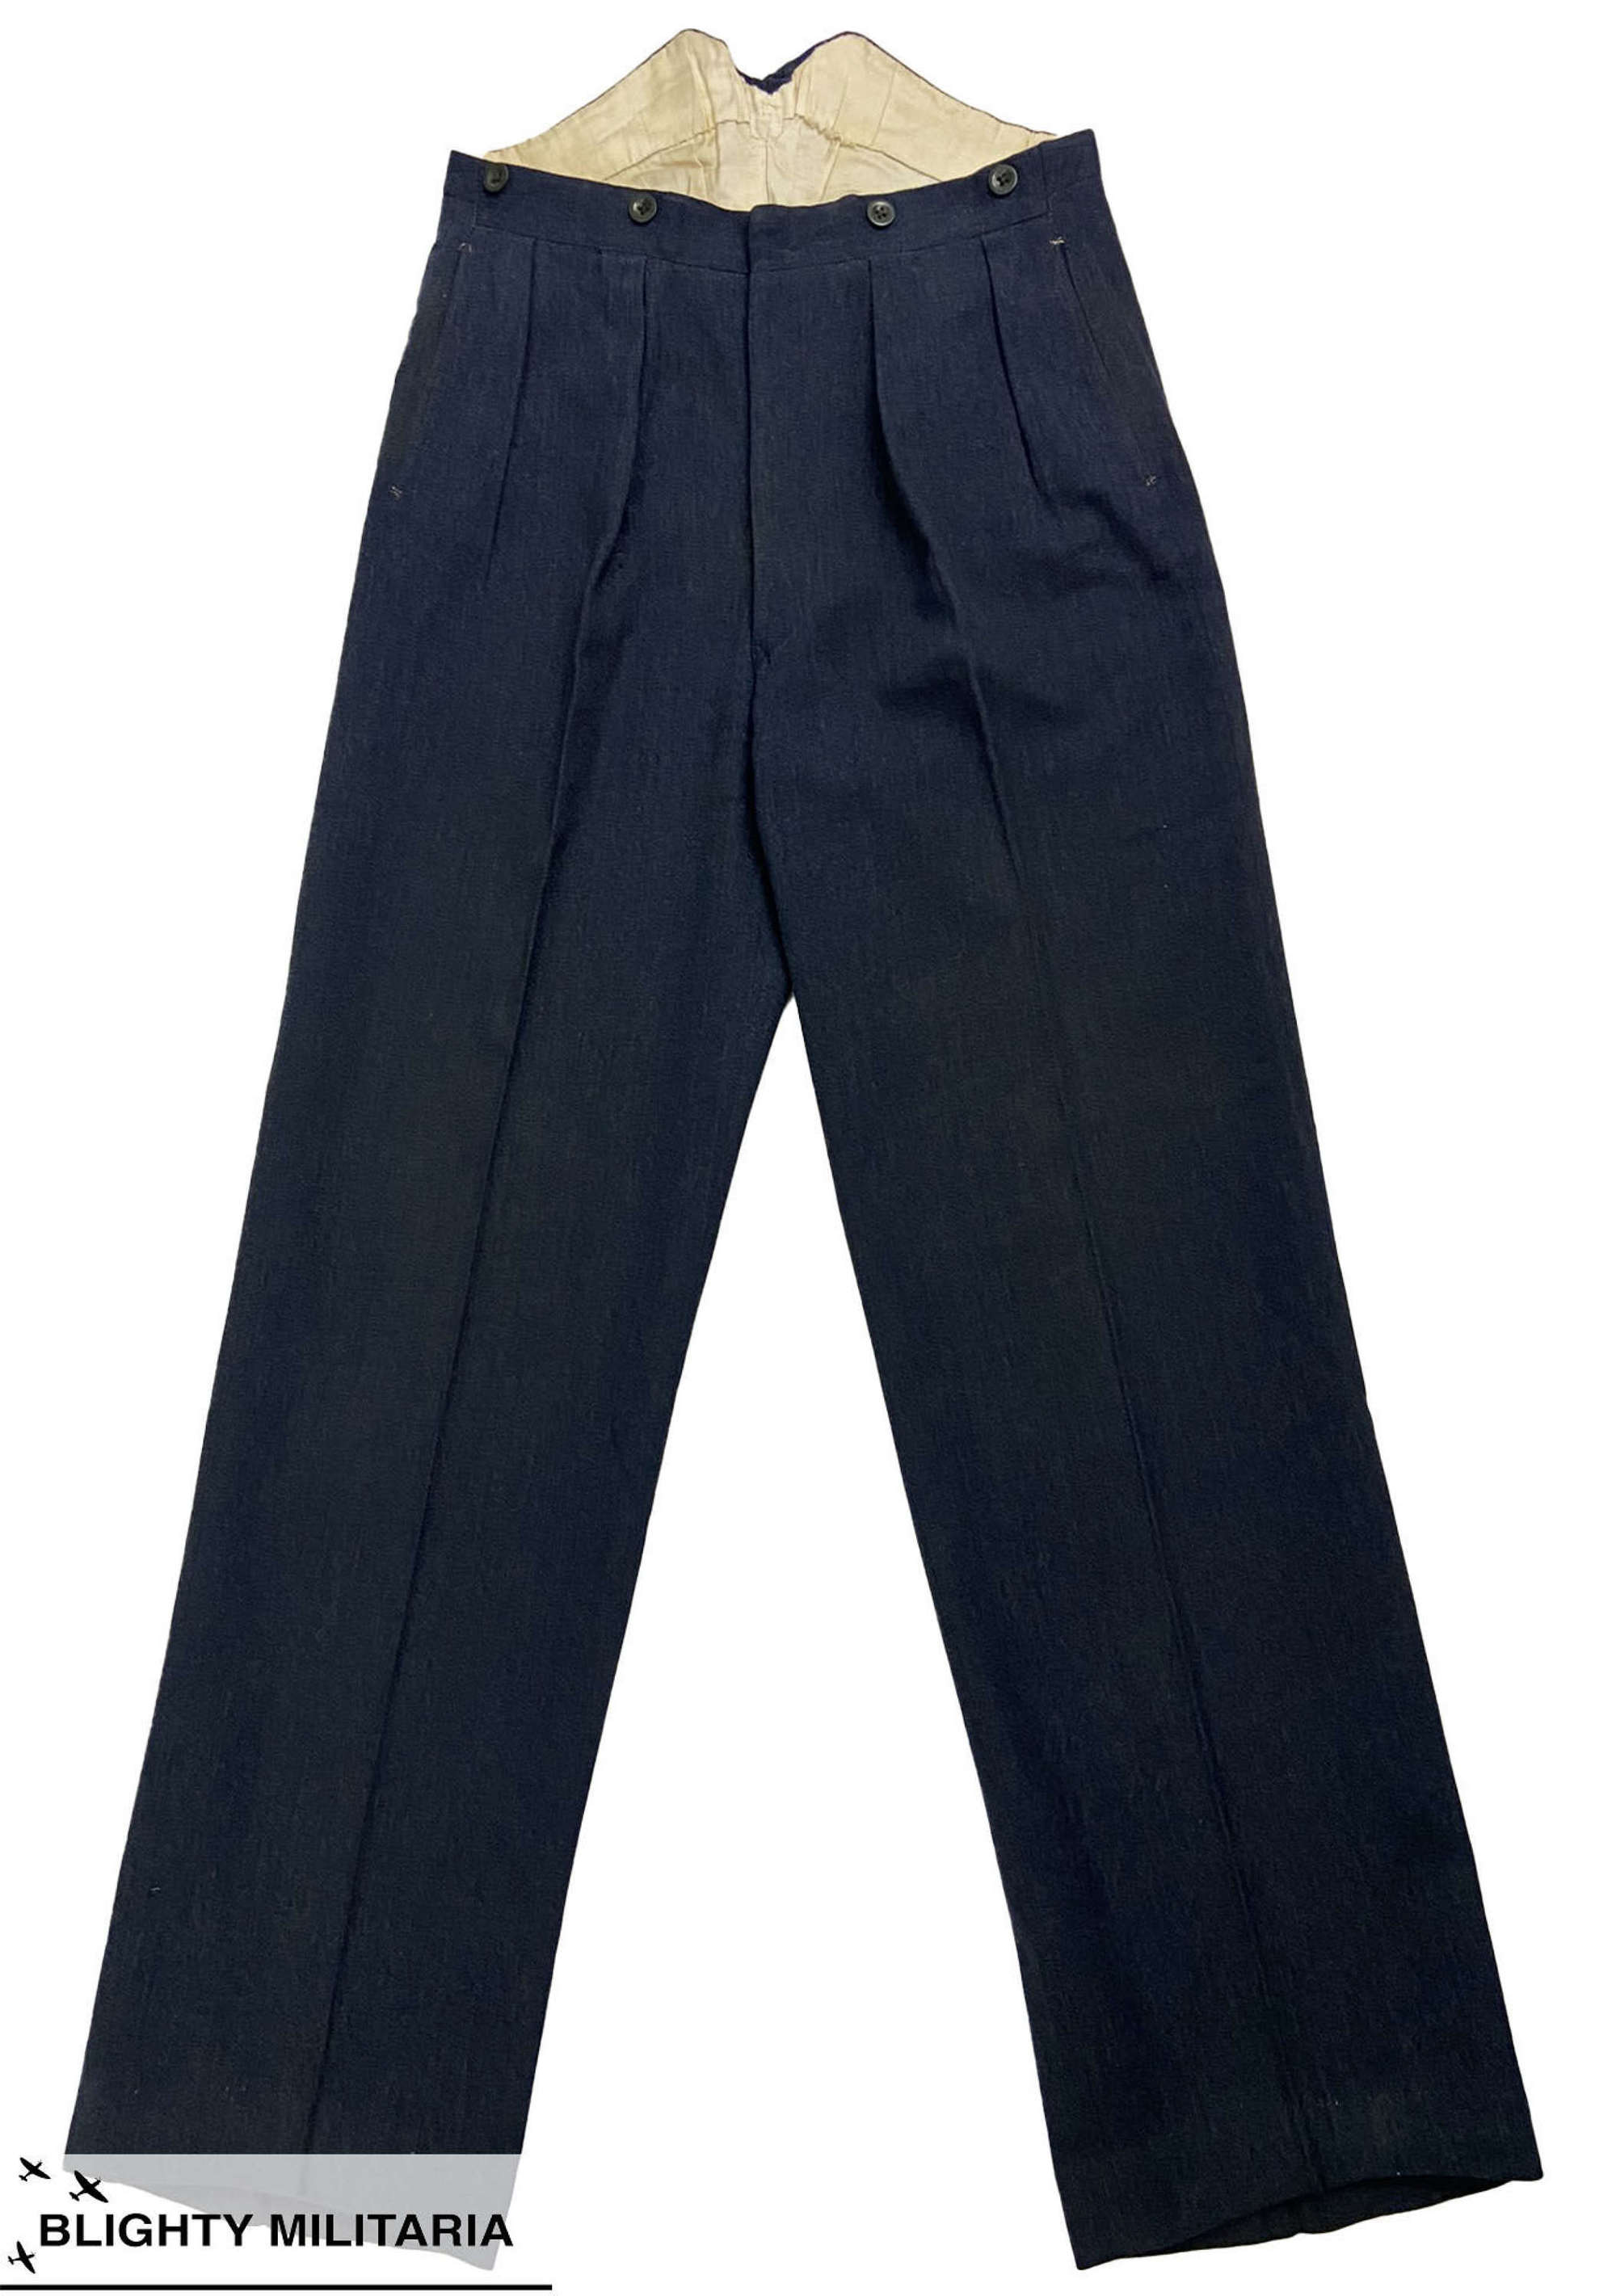 Original 1940s RAF Officer's Service Dress Trousers - Size 31x33.5